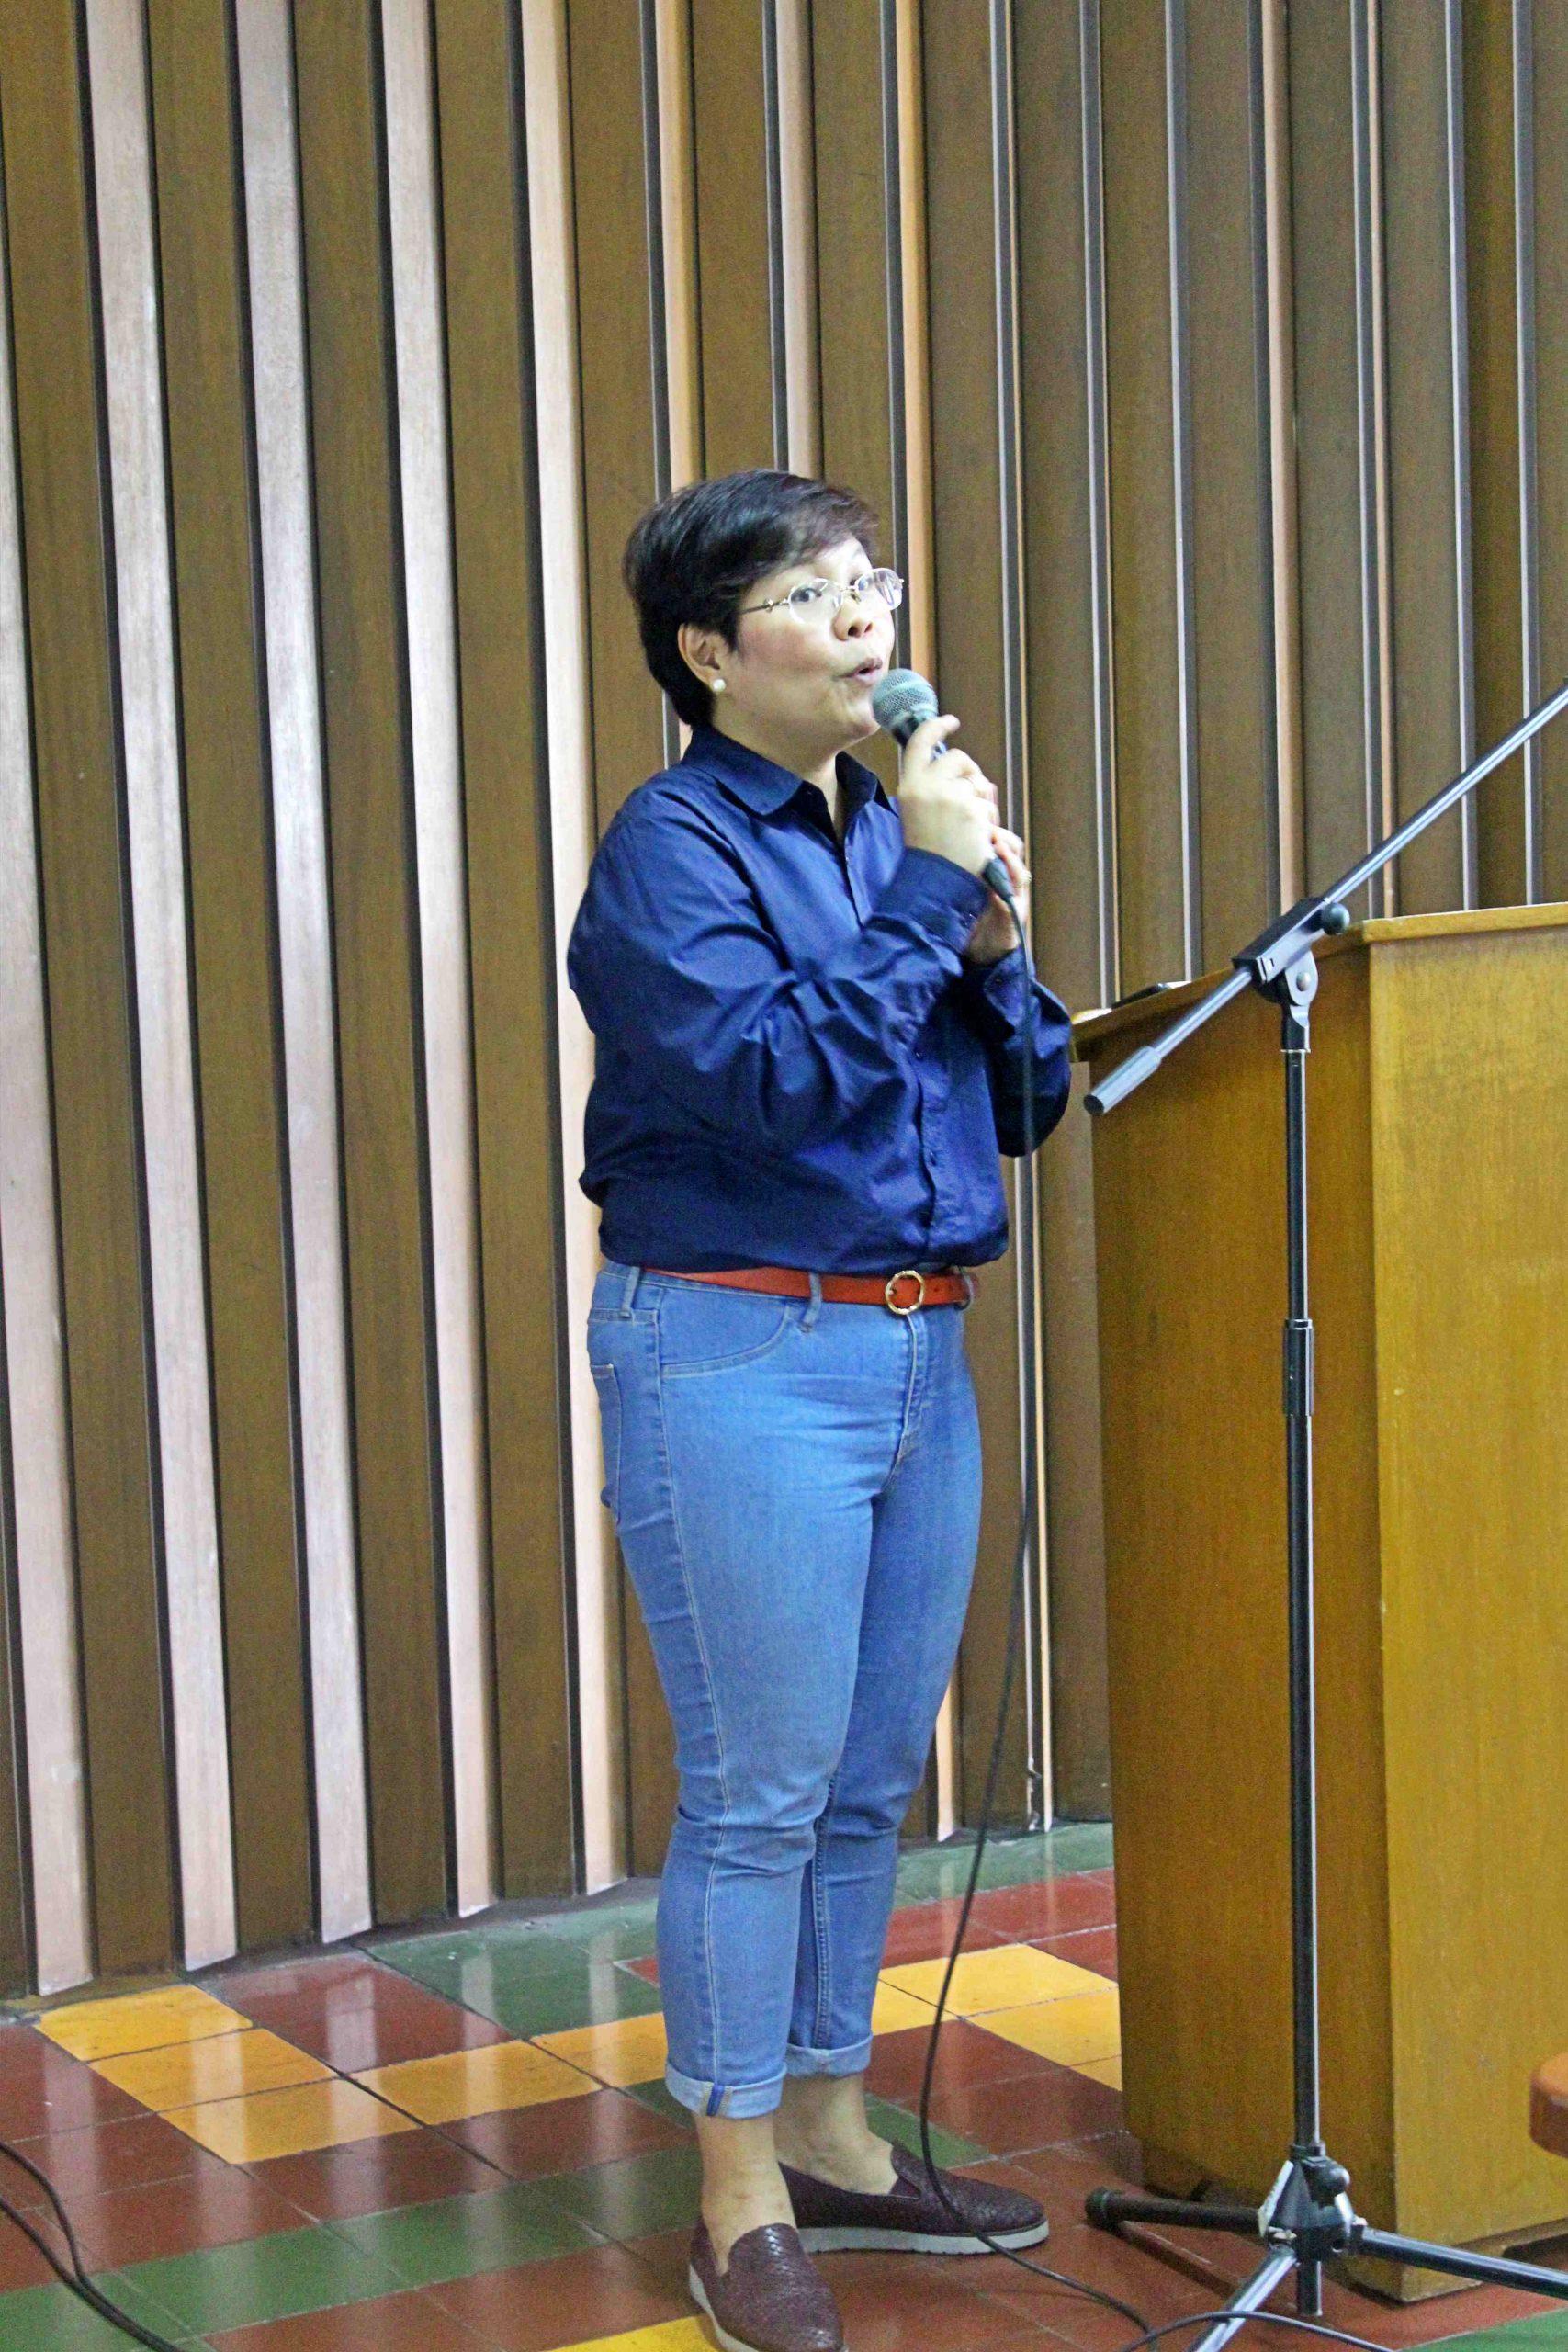 GEC Director Vanessa Oyzon introduces Dr. Koo